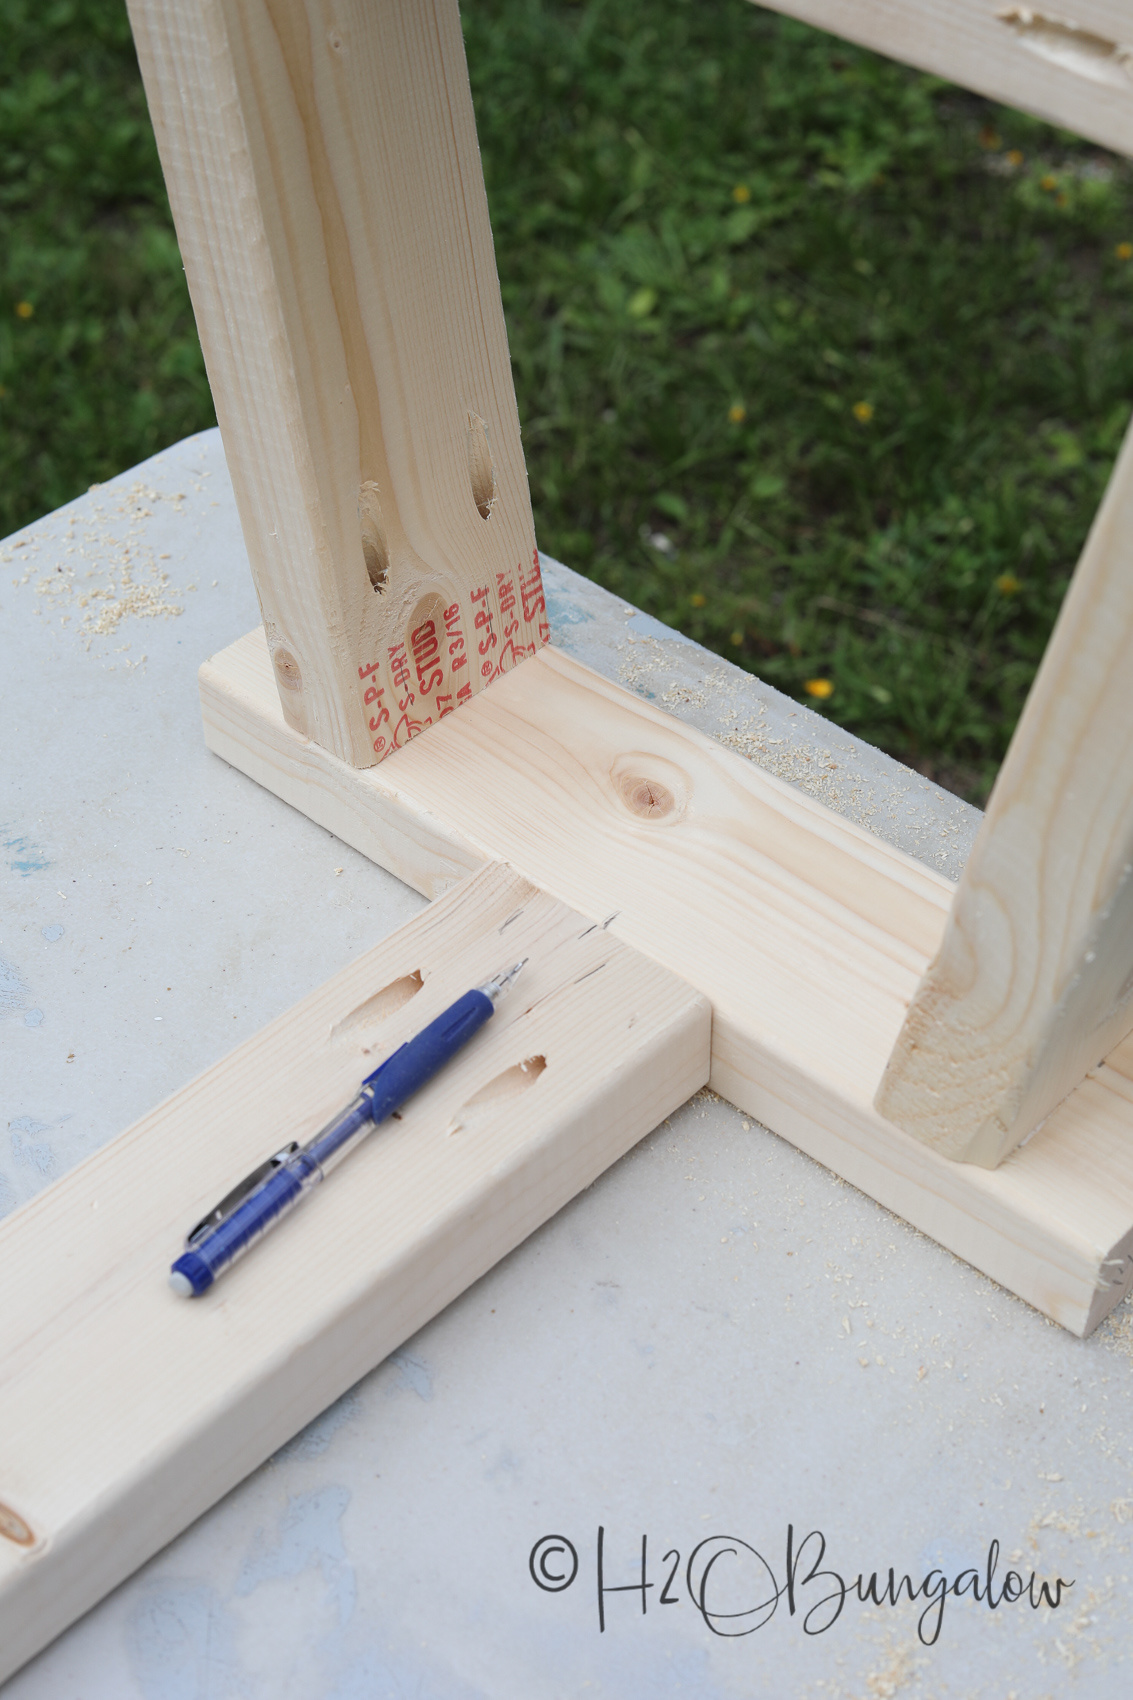 Assembling wood pieces, DIY modern rustic wood bench tutorial 